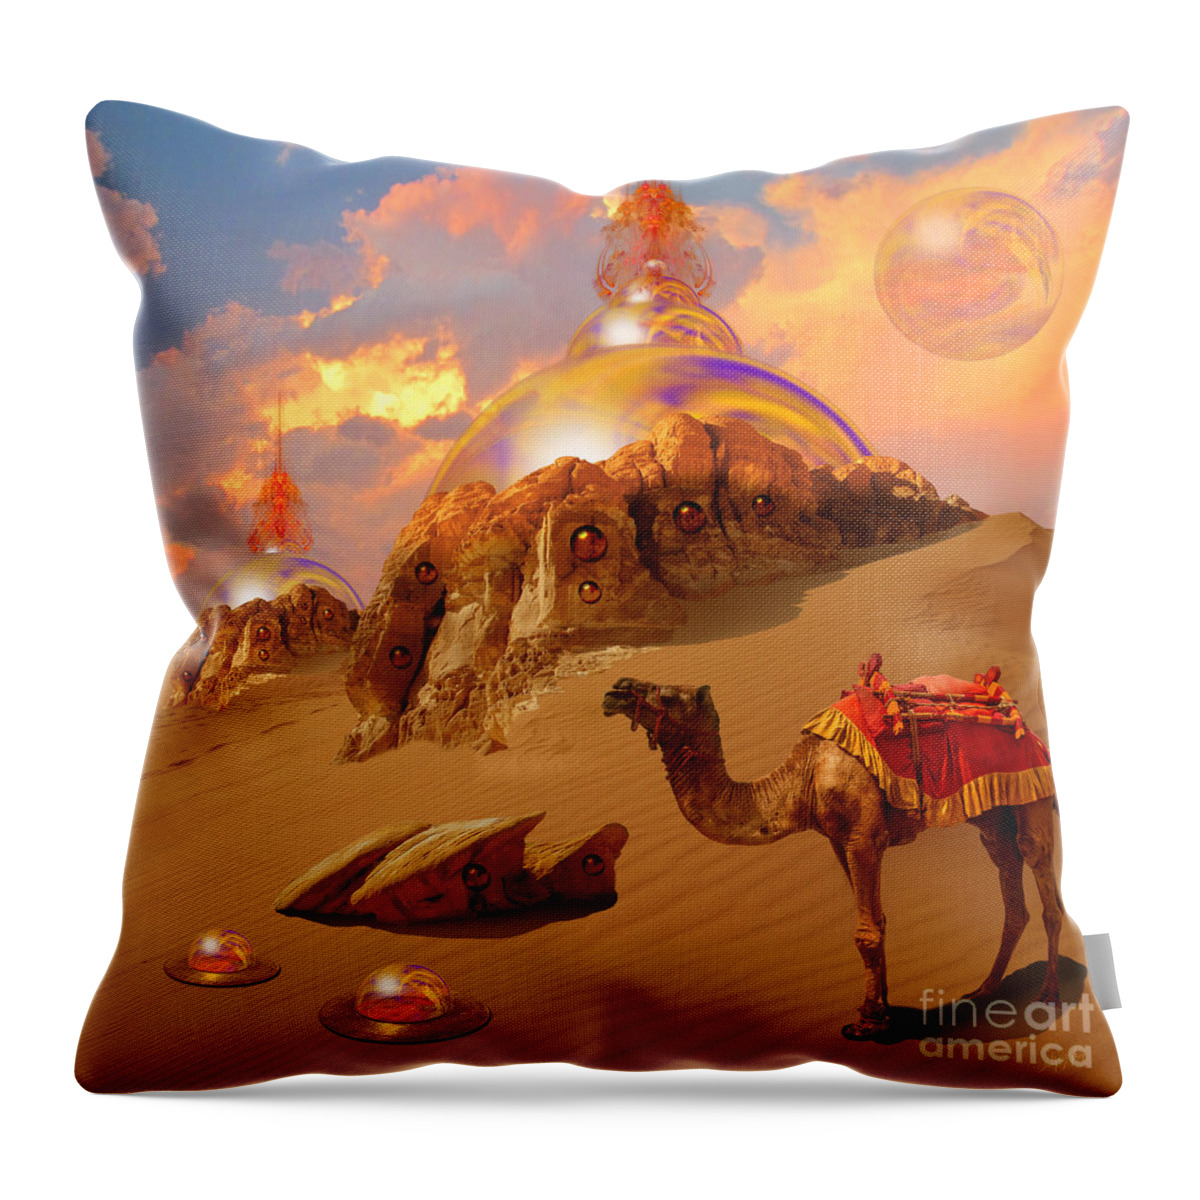 Sci-fi Throw Pillow featuring the digital art Mystic desert by Alexa Szlavics